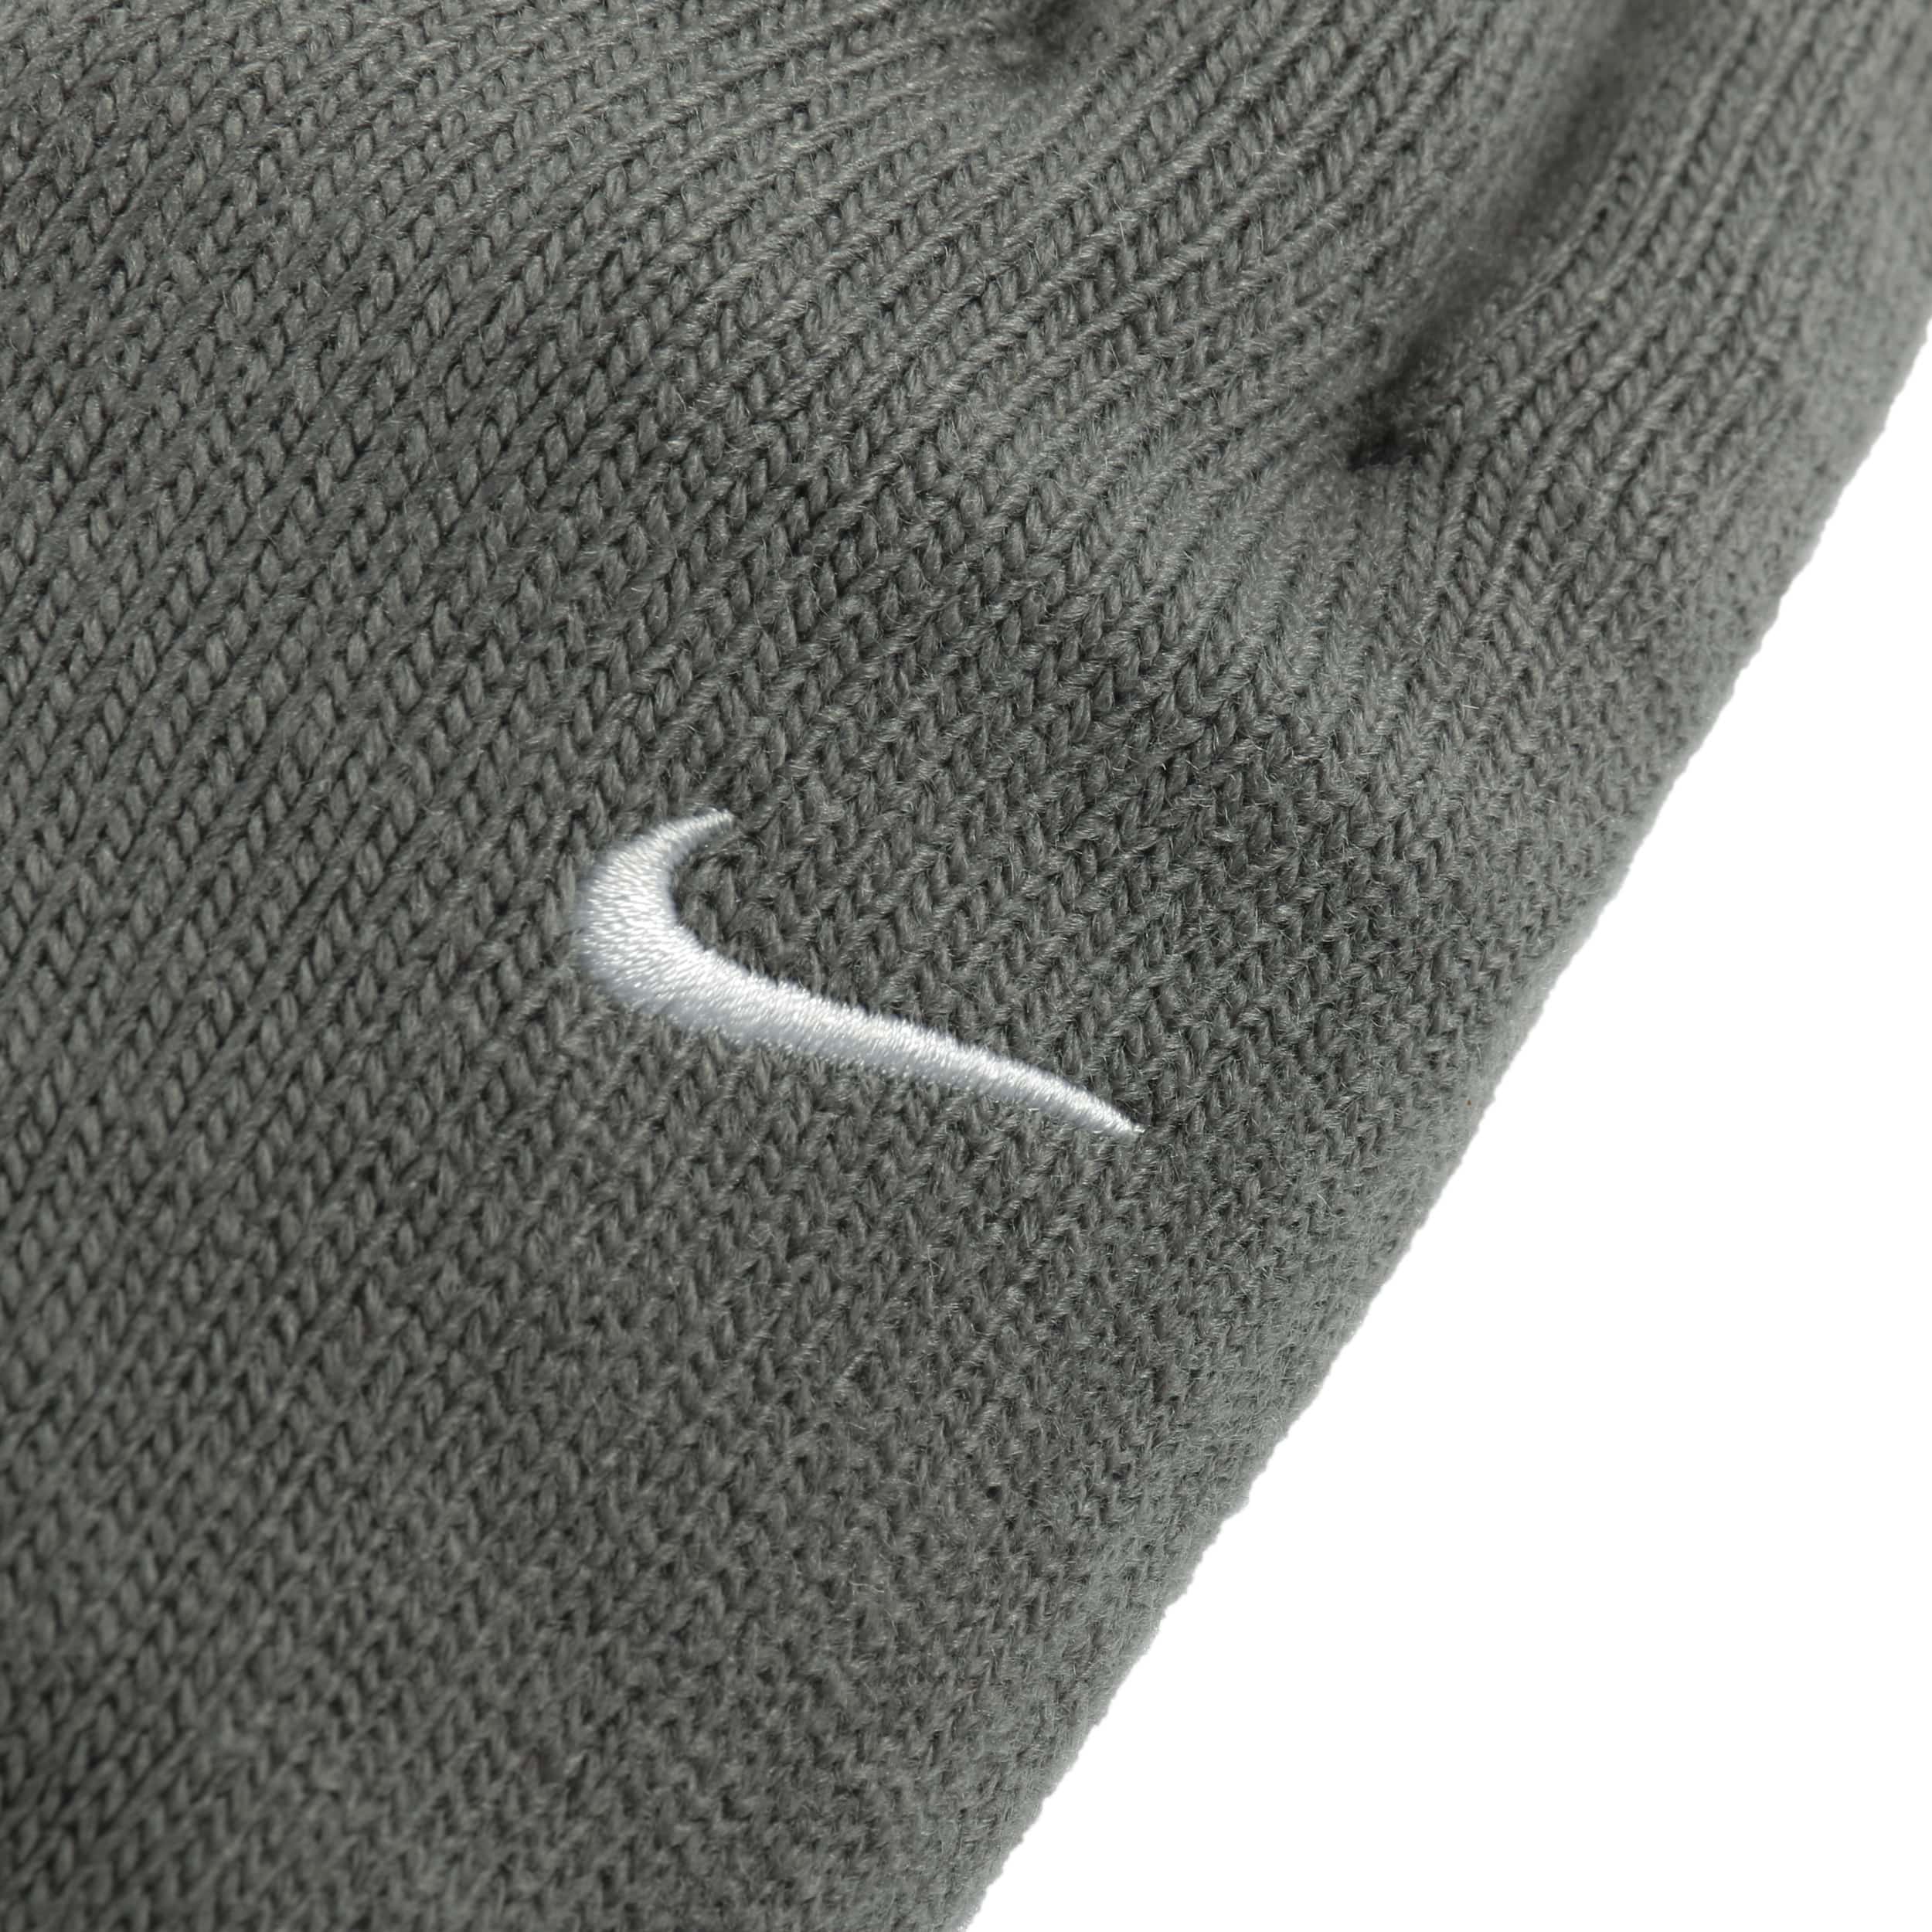 Swoosh 2.0 Knit Gloves by Nike - 21,95